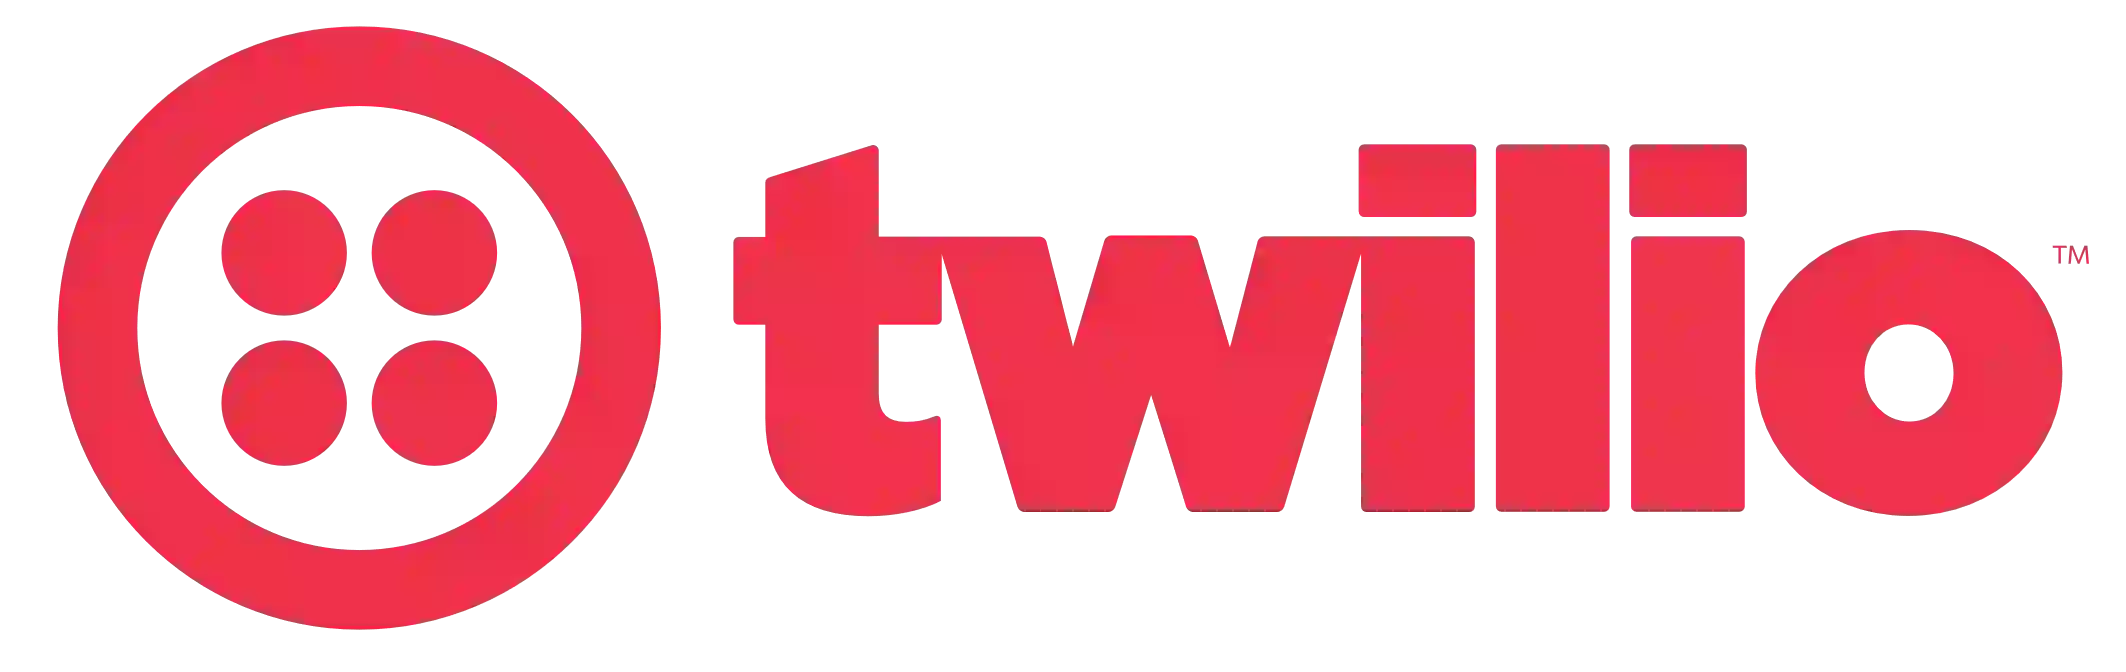 Twilio_logo (1) (1)